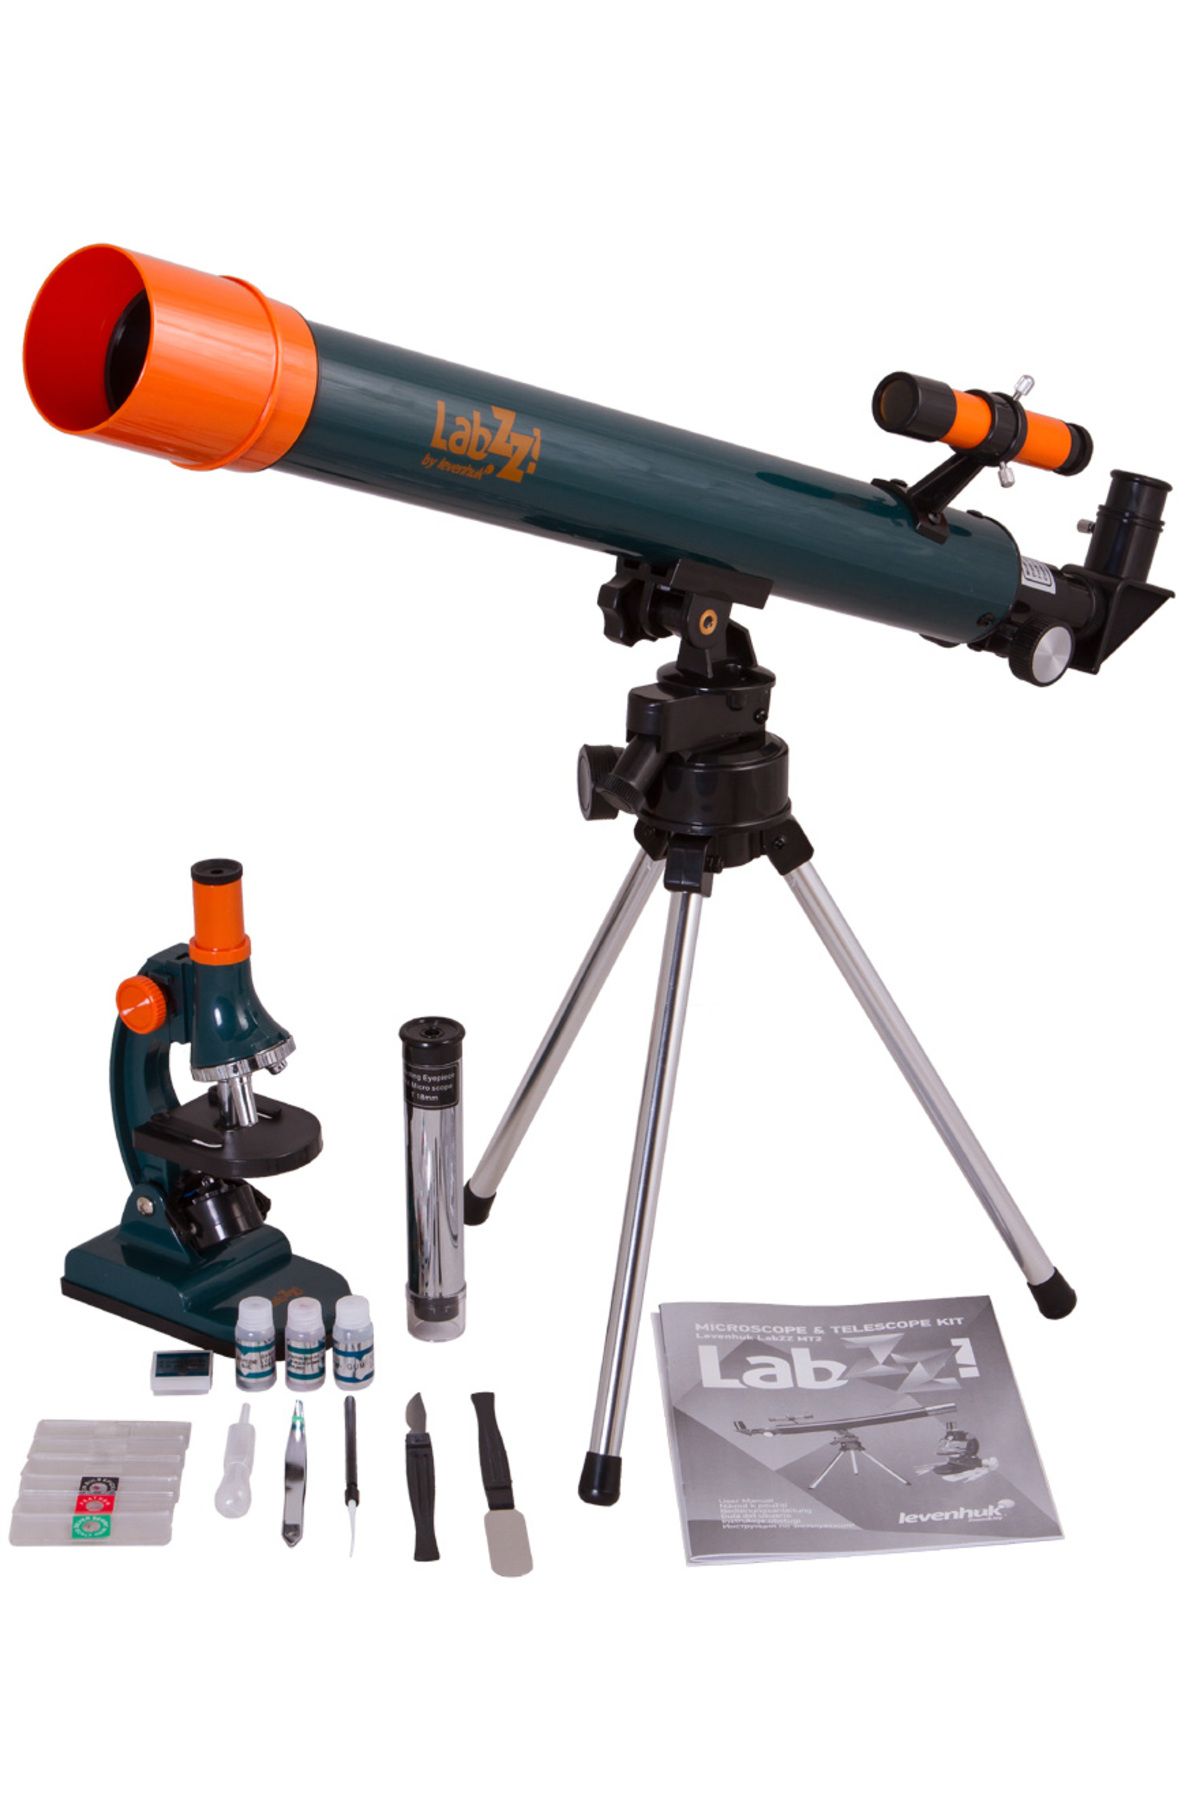 CALRADİA LabZZ MT2 Mikroskop ve Teleskop Kiti (606)